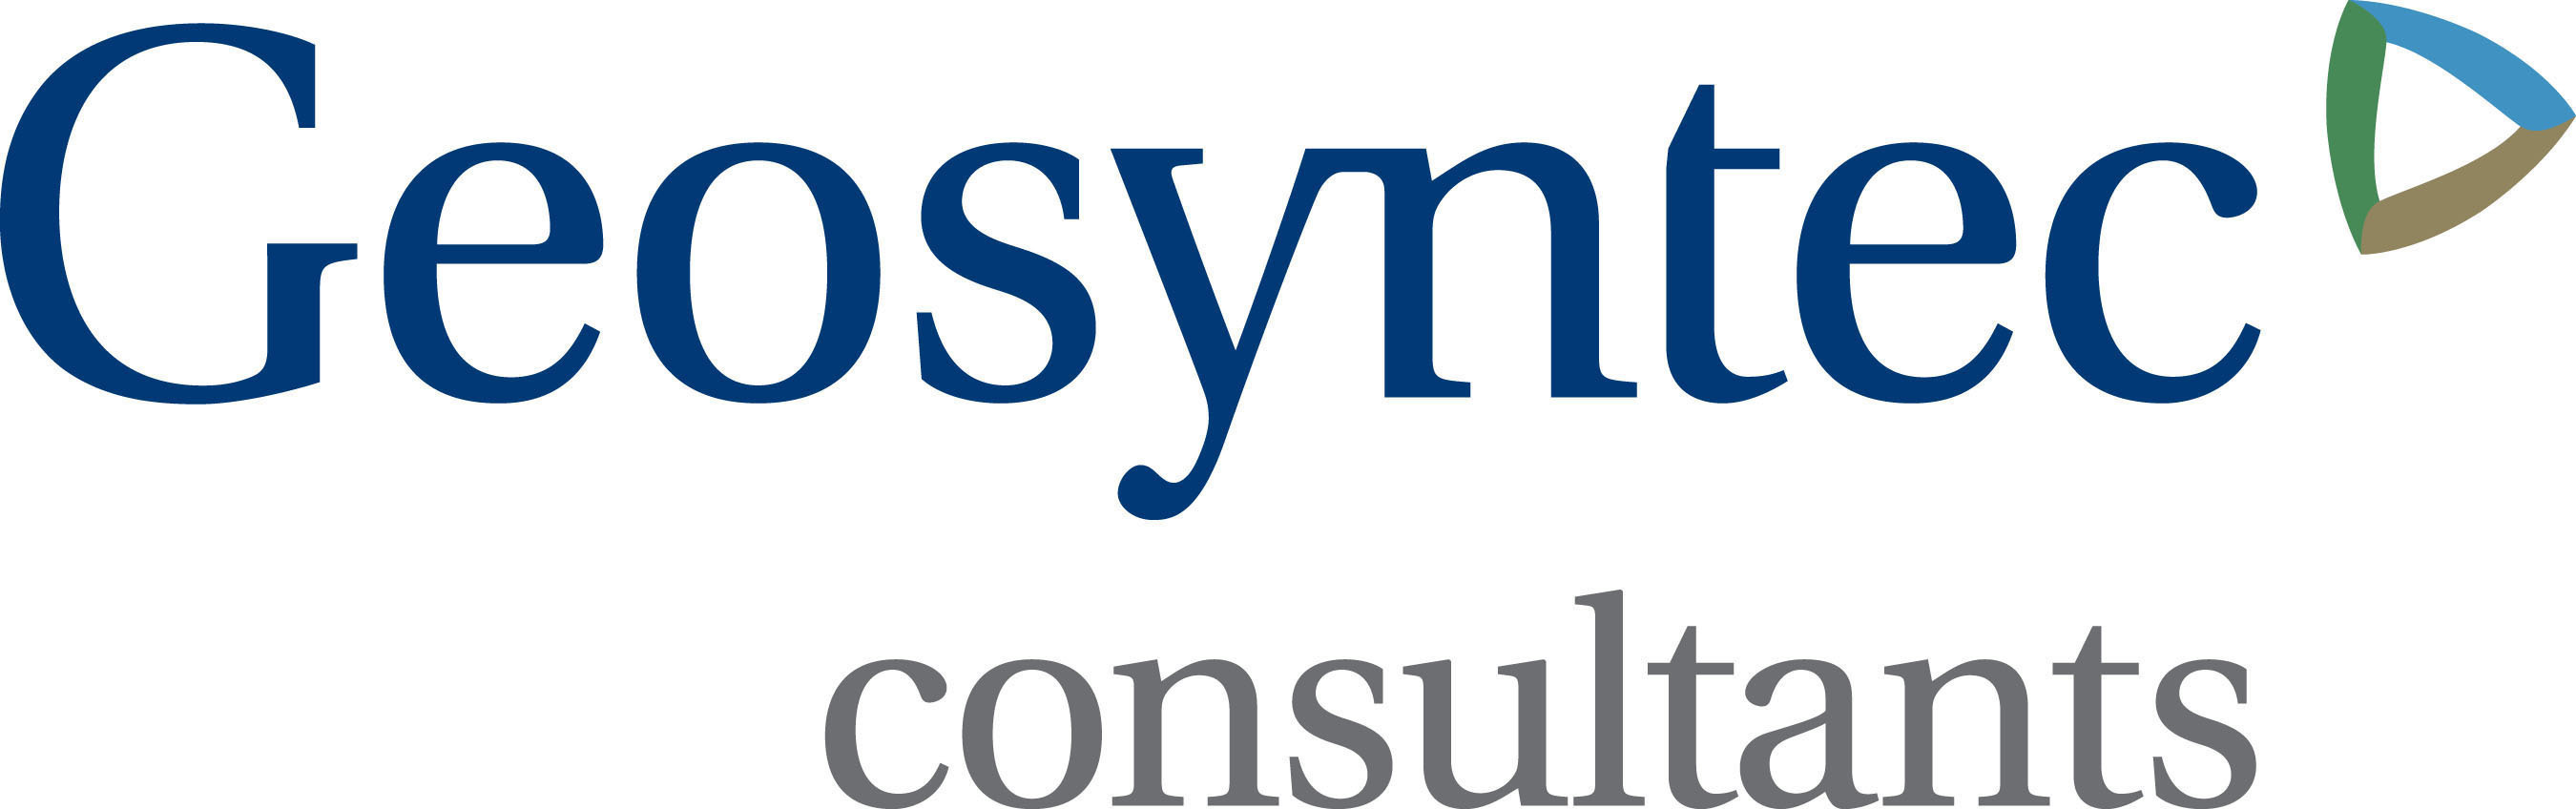 Geosyntec Consultants Logo. (PRNewsFoto/Geosyntec Consultants) (PRNewsFoto/)